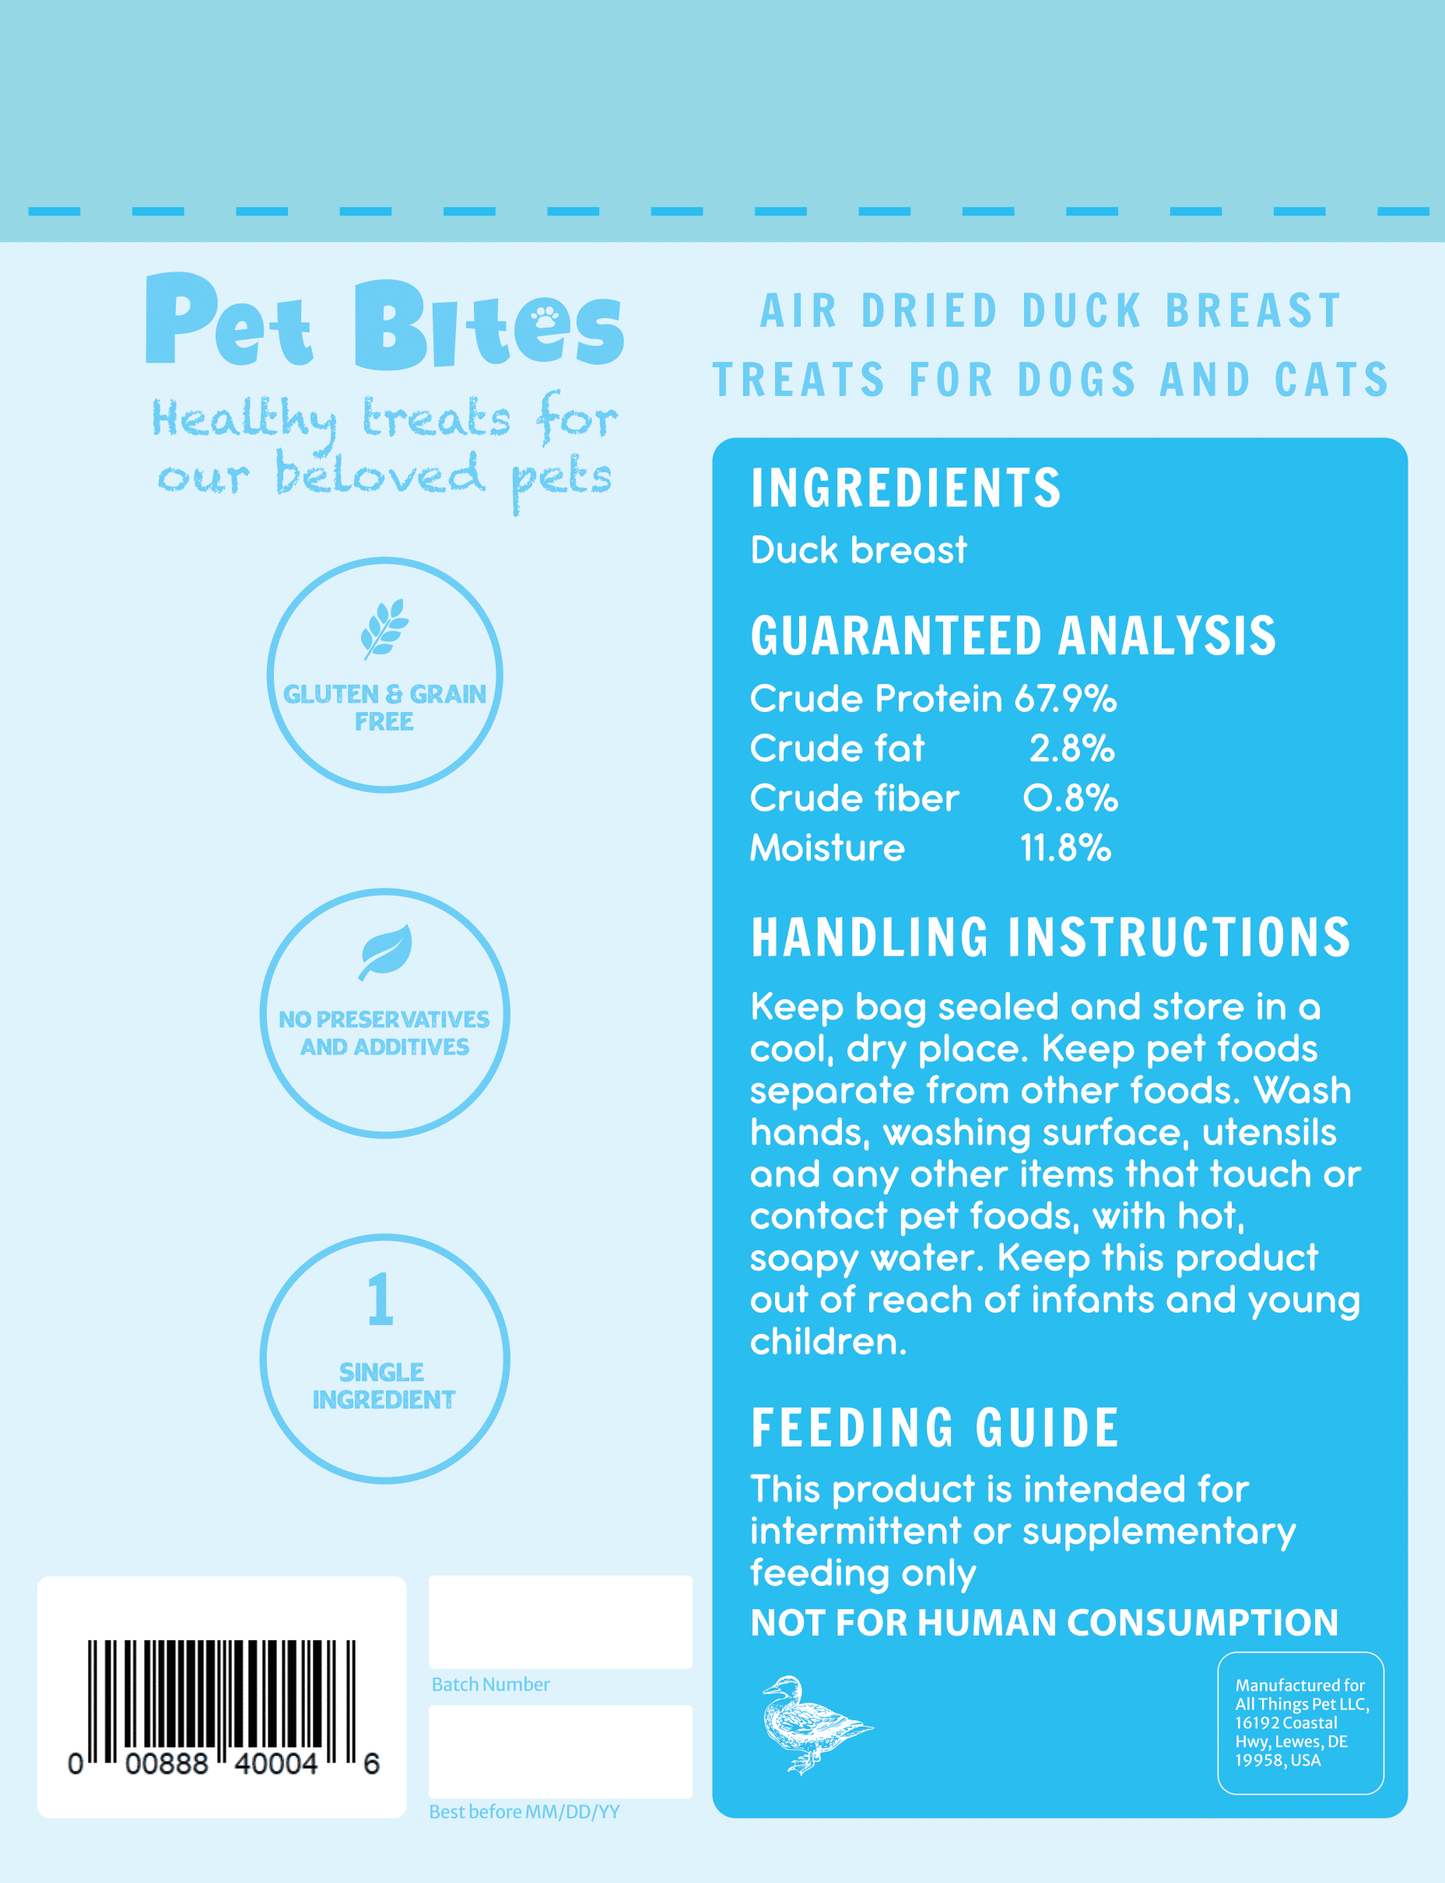 Pet Bites Air Dried Dog & Cat Treats - Duck Breast (2 sizes)